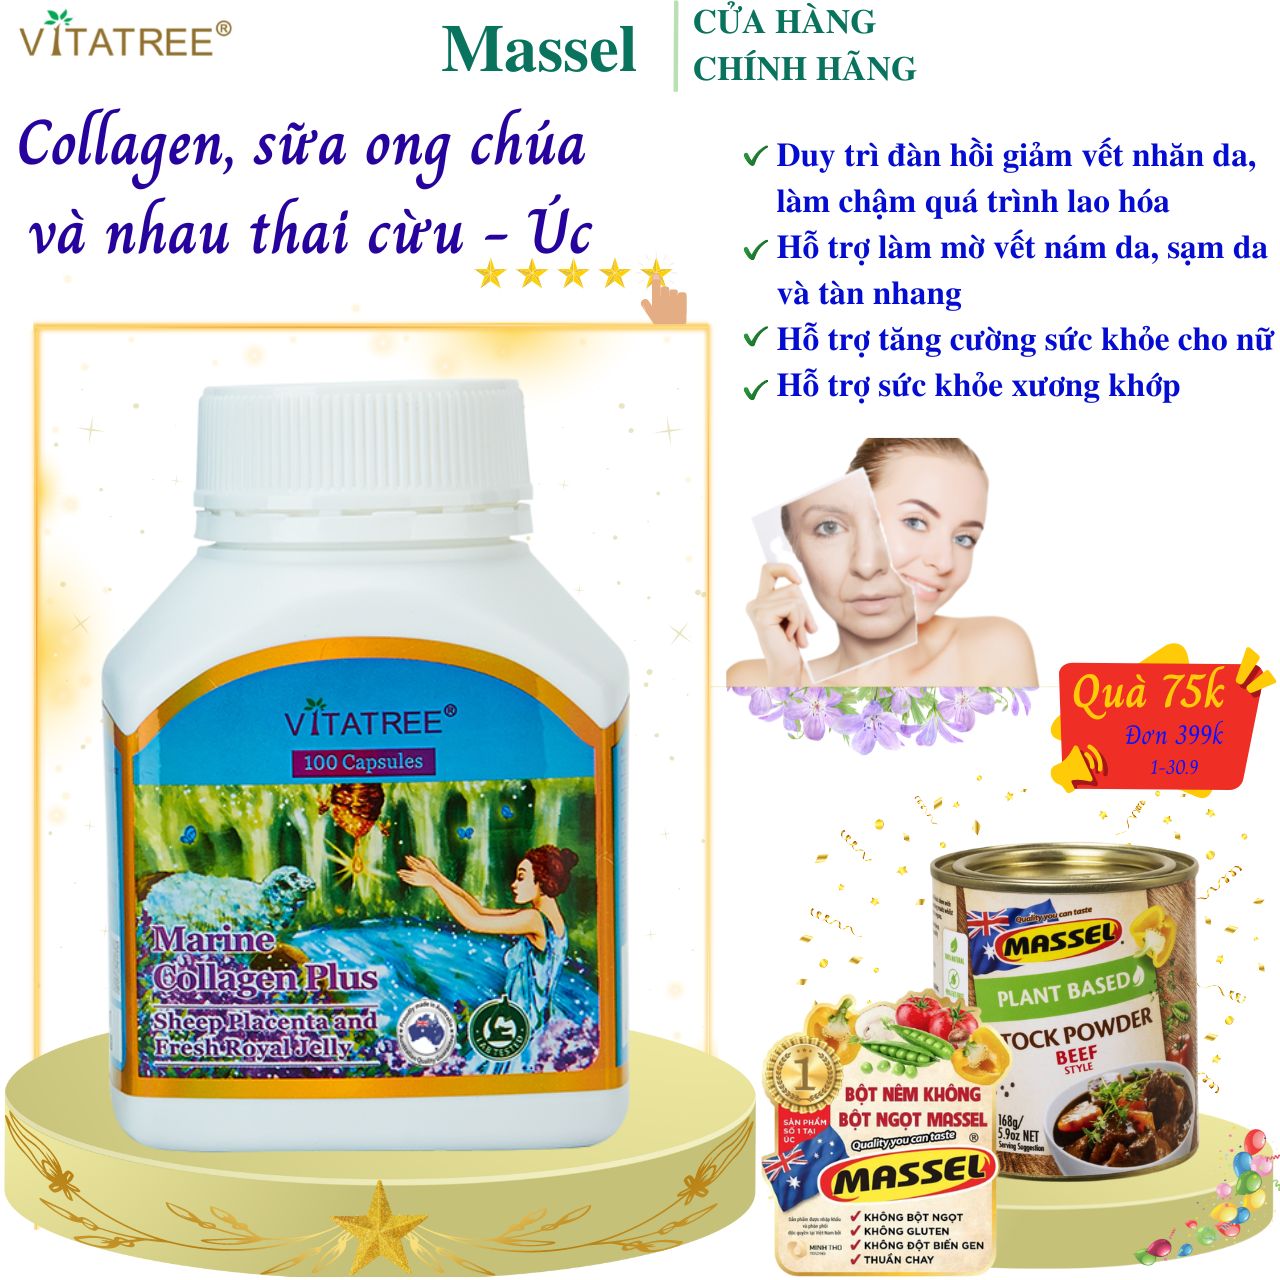 Collagen kết hợp Nhau Thai Cừu và Sữa Ong Chúa Vitatree Marine Collagen Plus